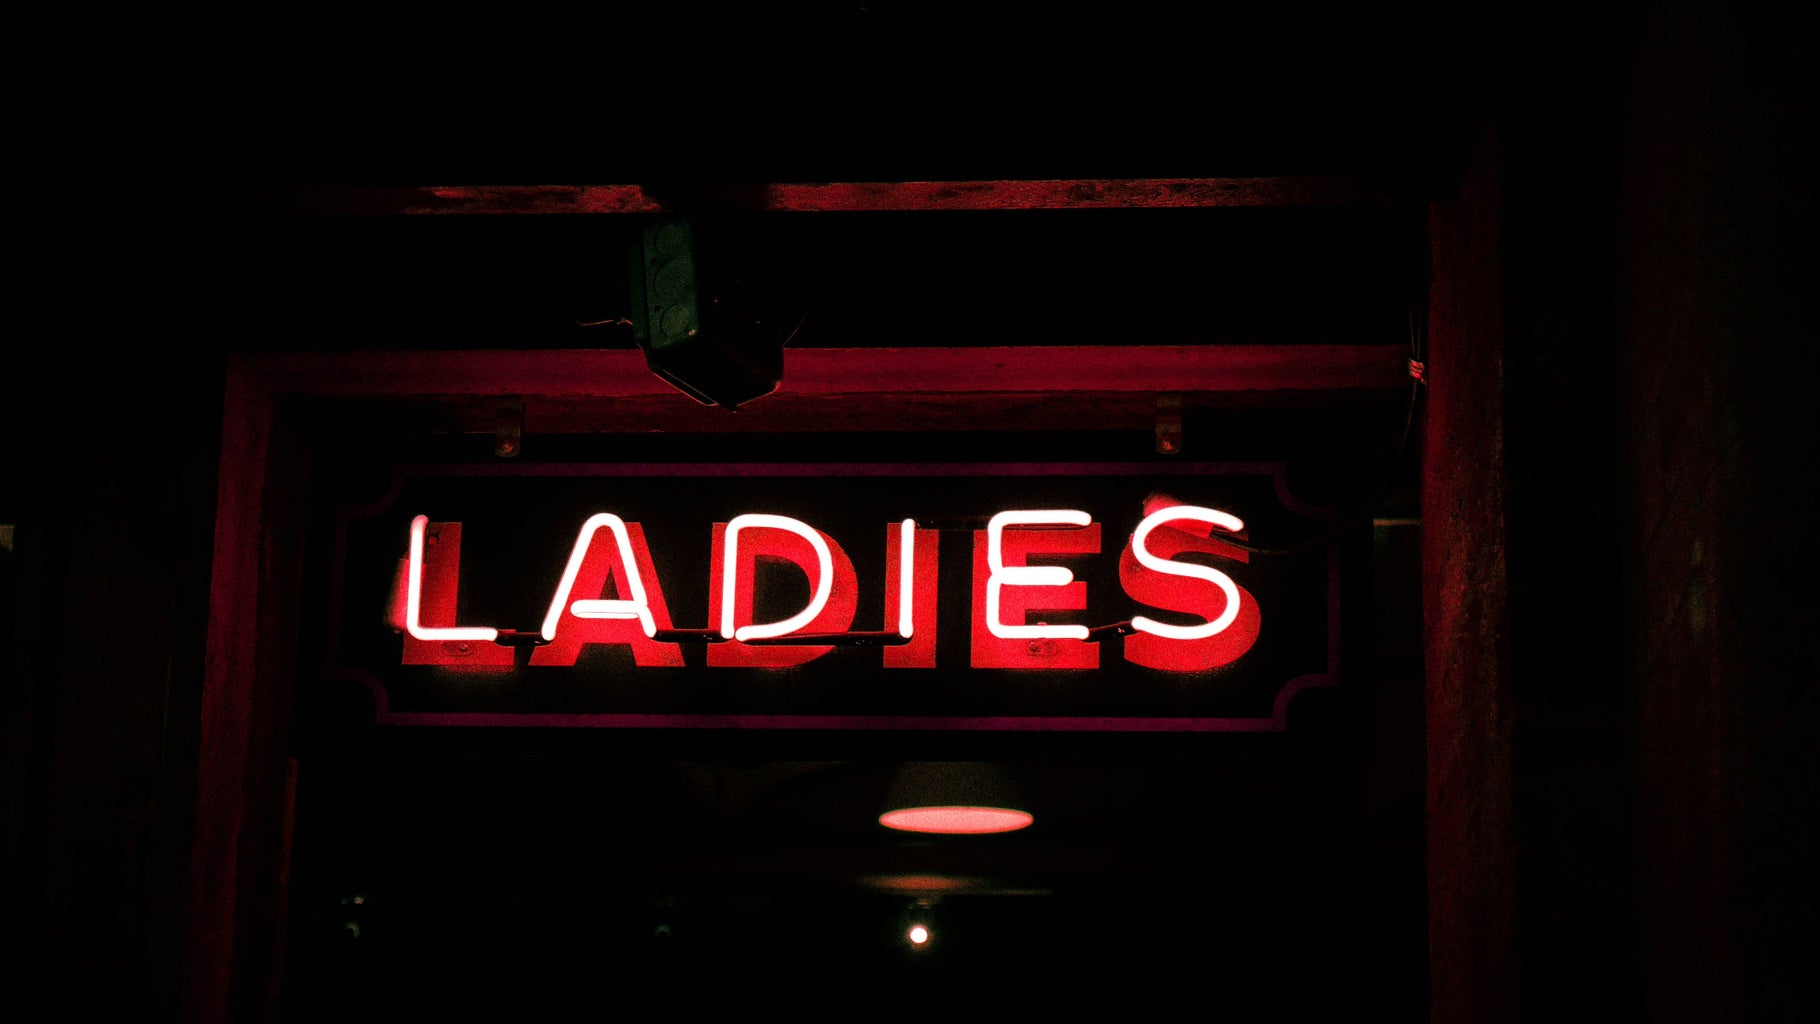 Red neon light singnage that says 'ladies'